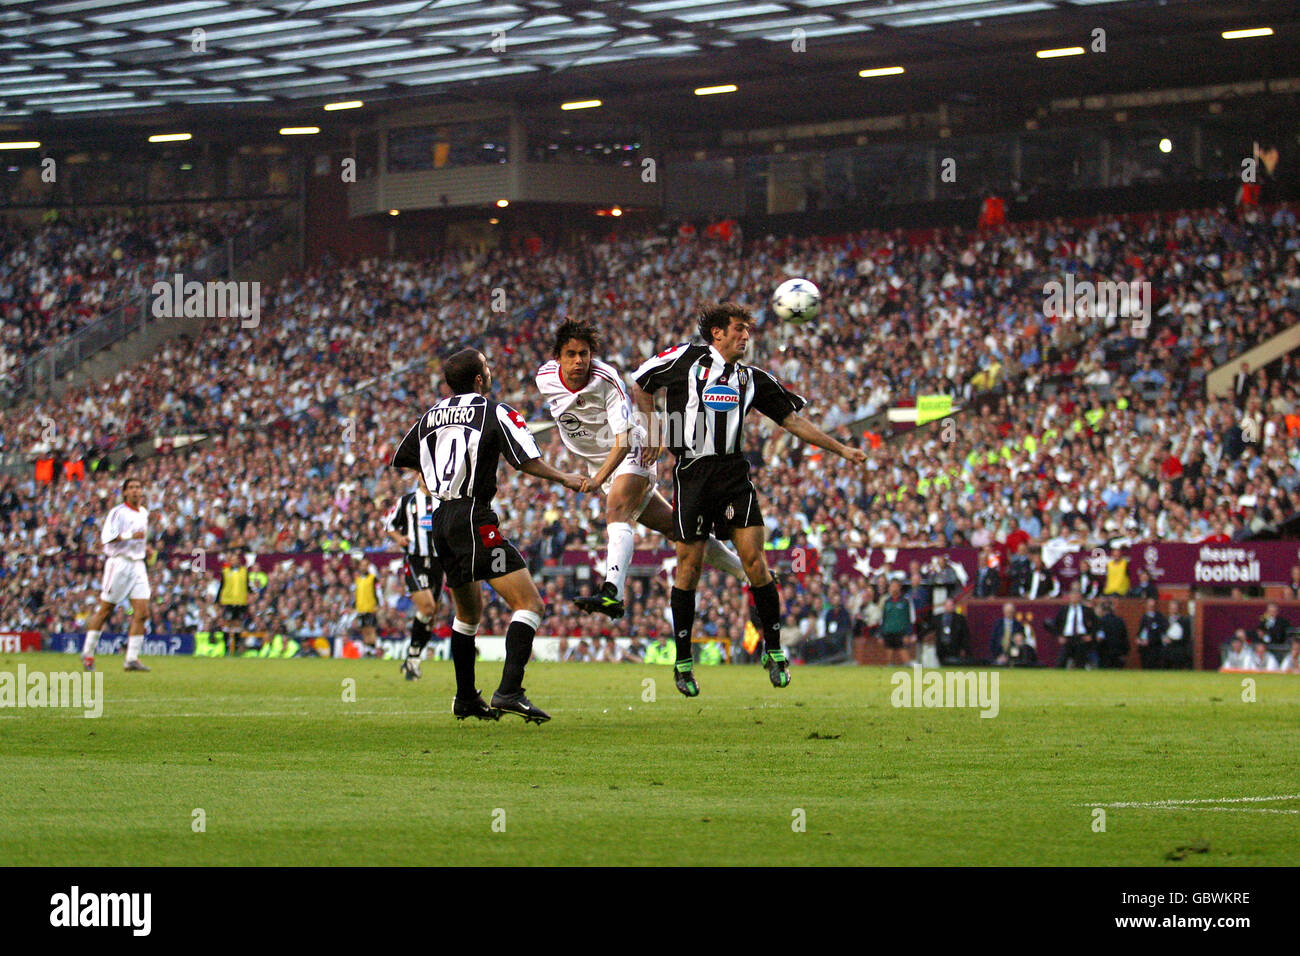 Soccer - UEFA Champions League - Final - Juventus v AC Milan. Juventus' Ciro Ferrara (r) and AC Milan's Filippo Inzaghi (c) both jump for the header Stock Photo